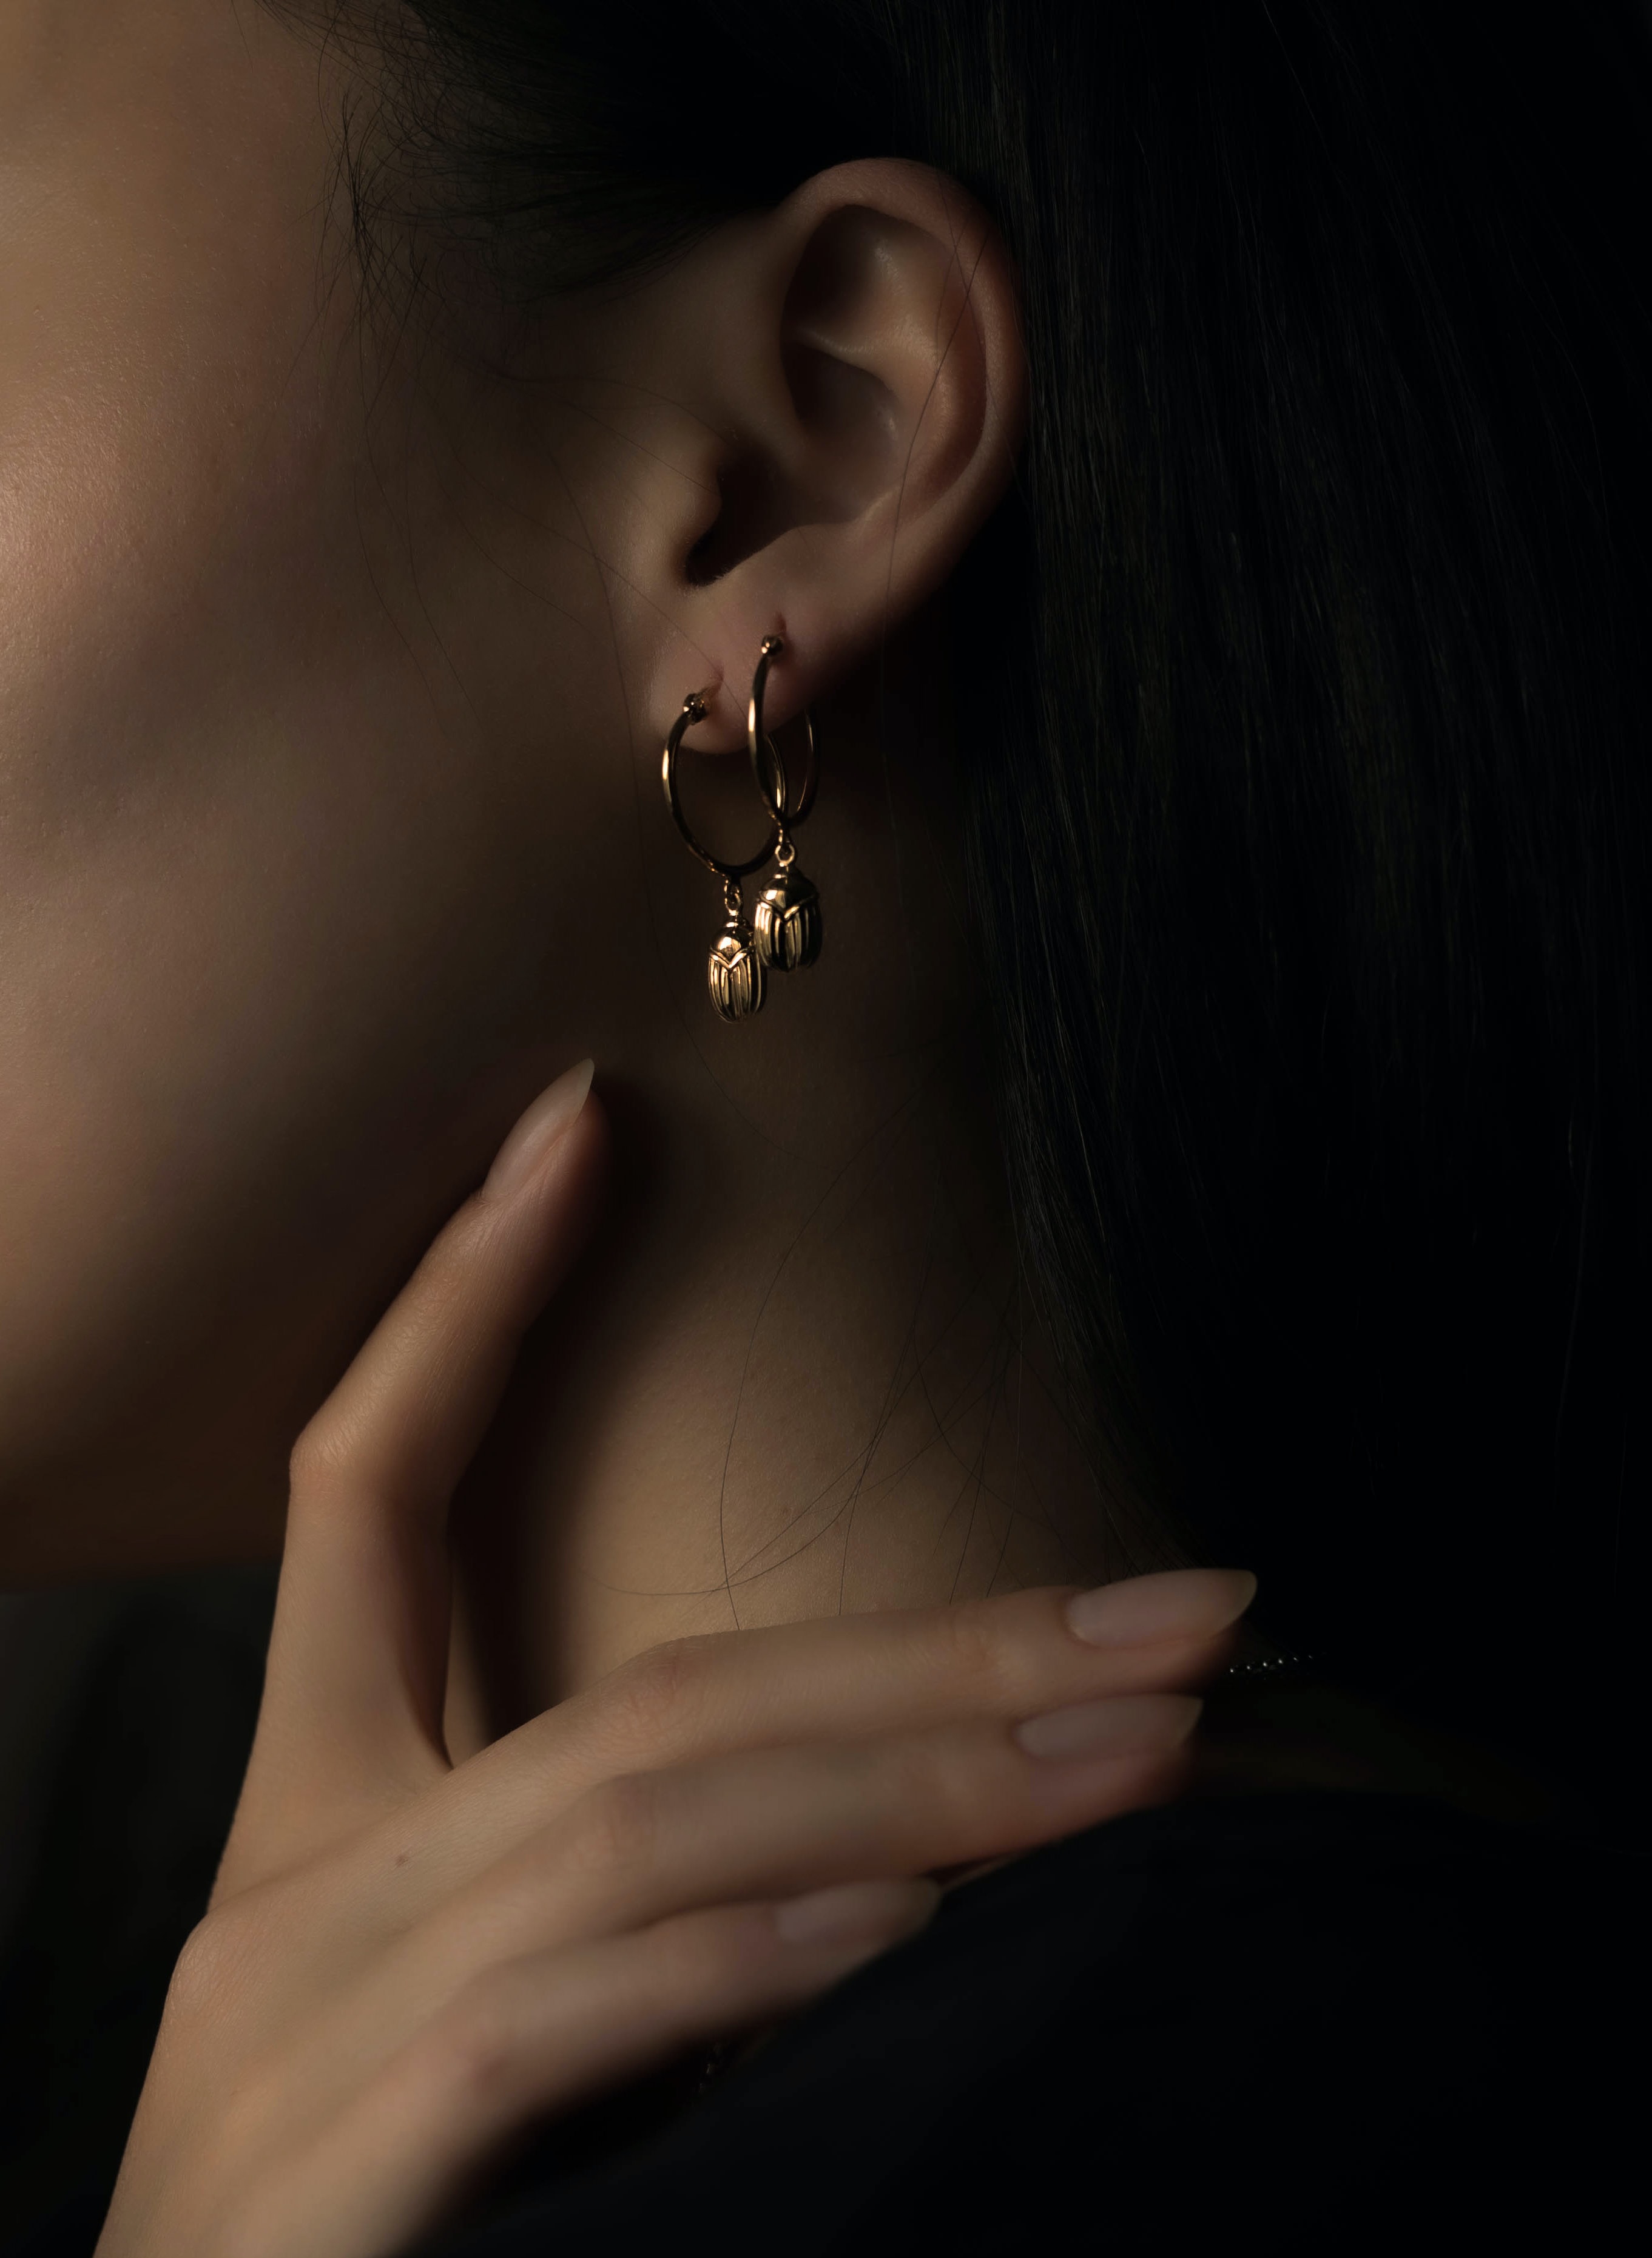 History of earrings